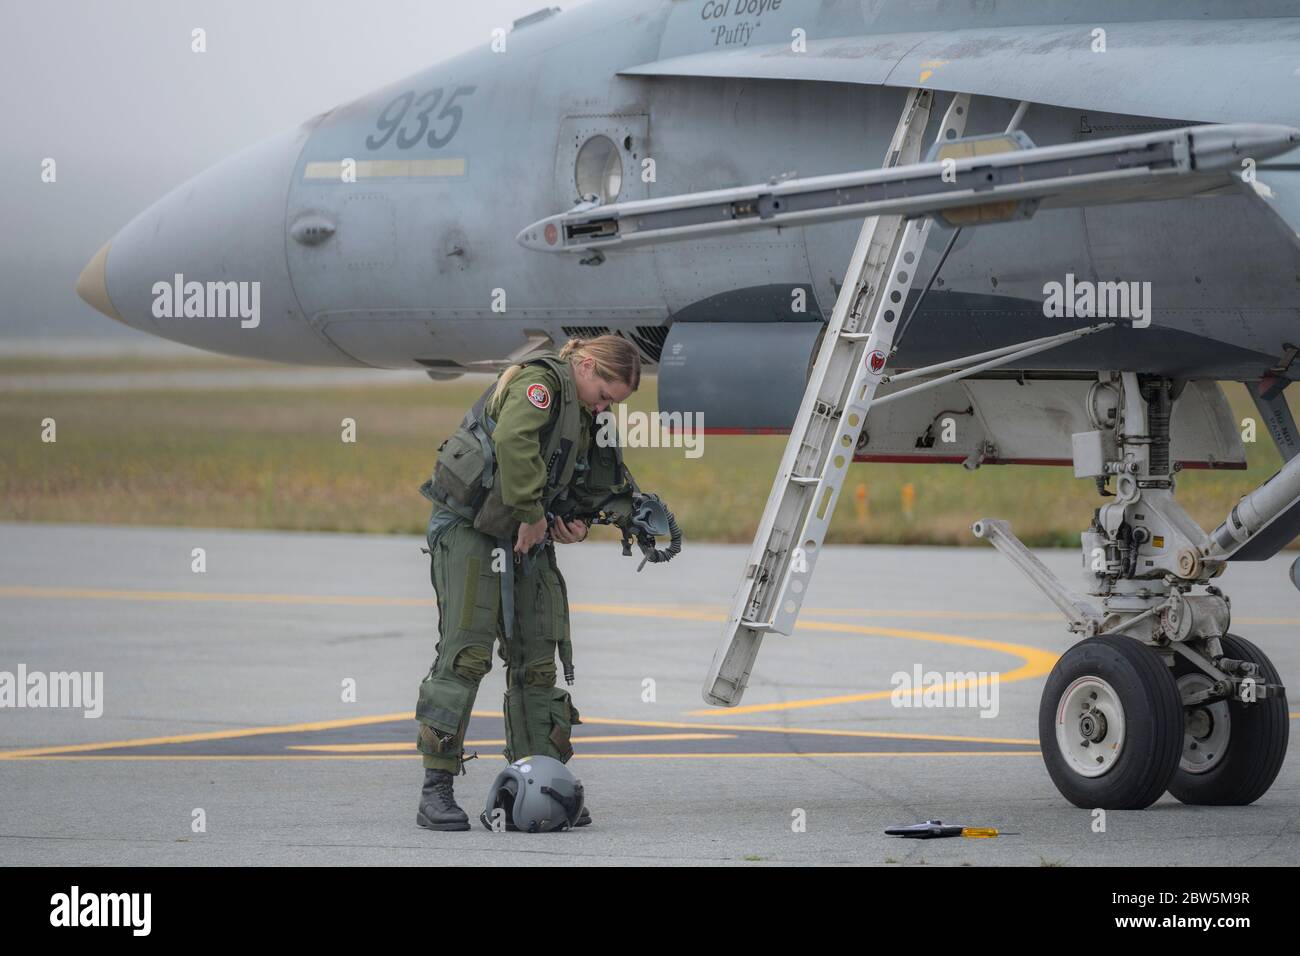 Saint John, New Brunswick, Canada - September 17, 2017: A female fighter pilot prepares her flight suit standing next to a CF-18 Hornet fighter jet. Stock Photo